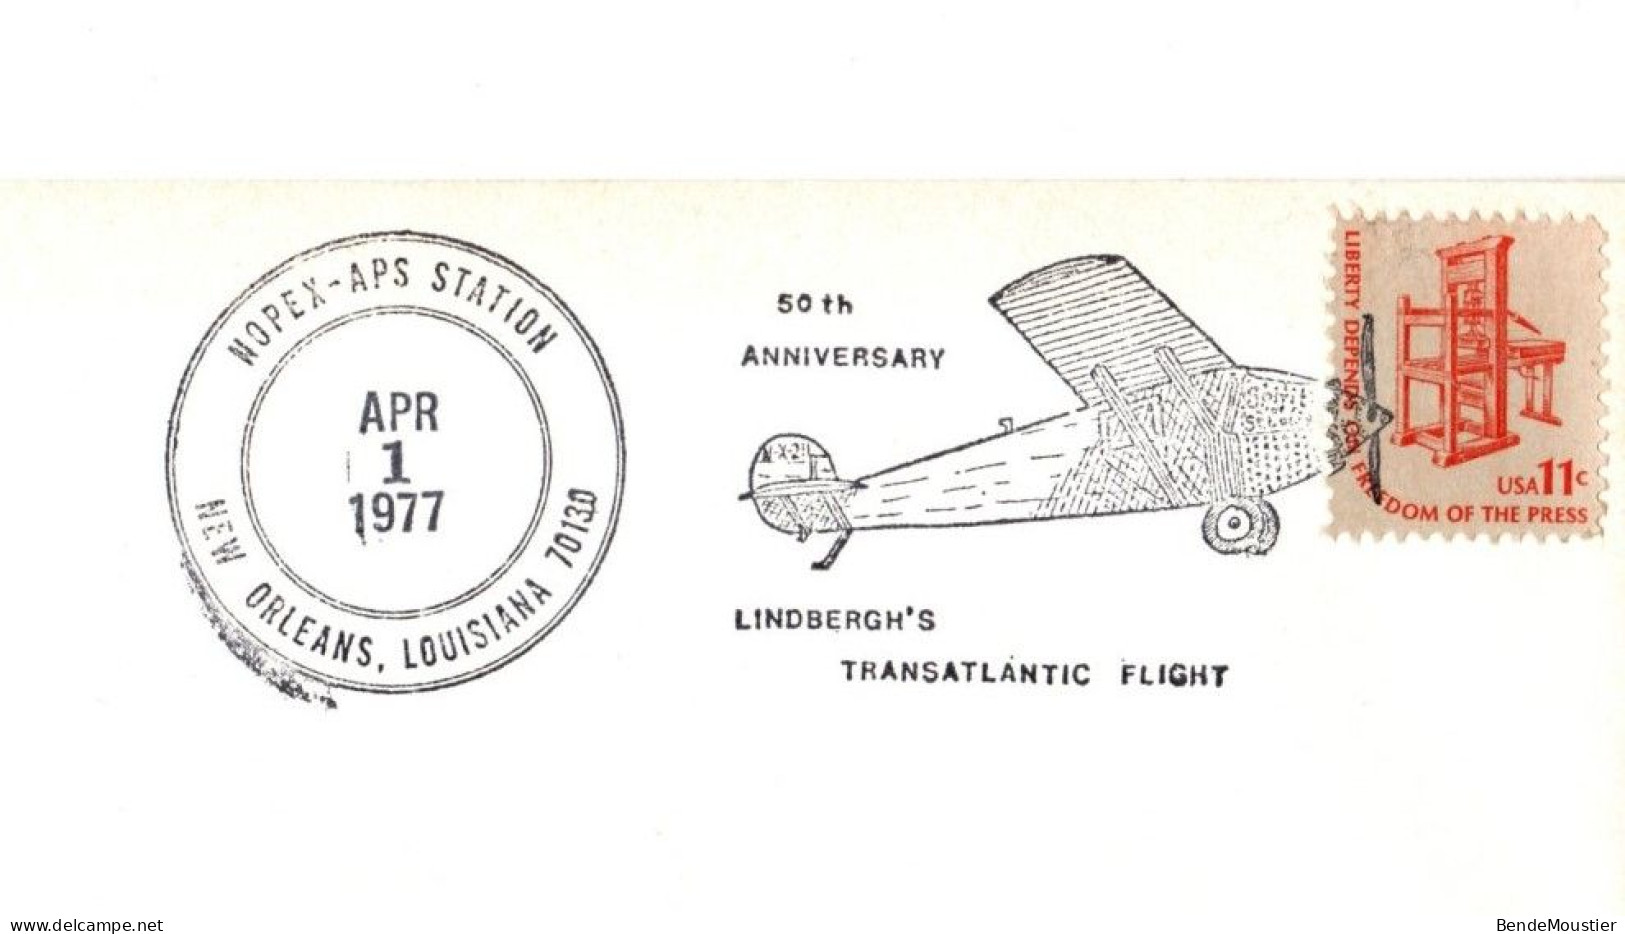 (R19e) USA - Hopex - APS Station - Lindbergh's Transatlantic Flight - 50 Th Anniversary - New Orleans - Louisiana  1977. - 3c. 1961-... Lettres